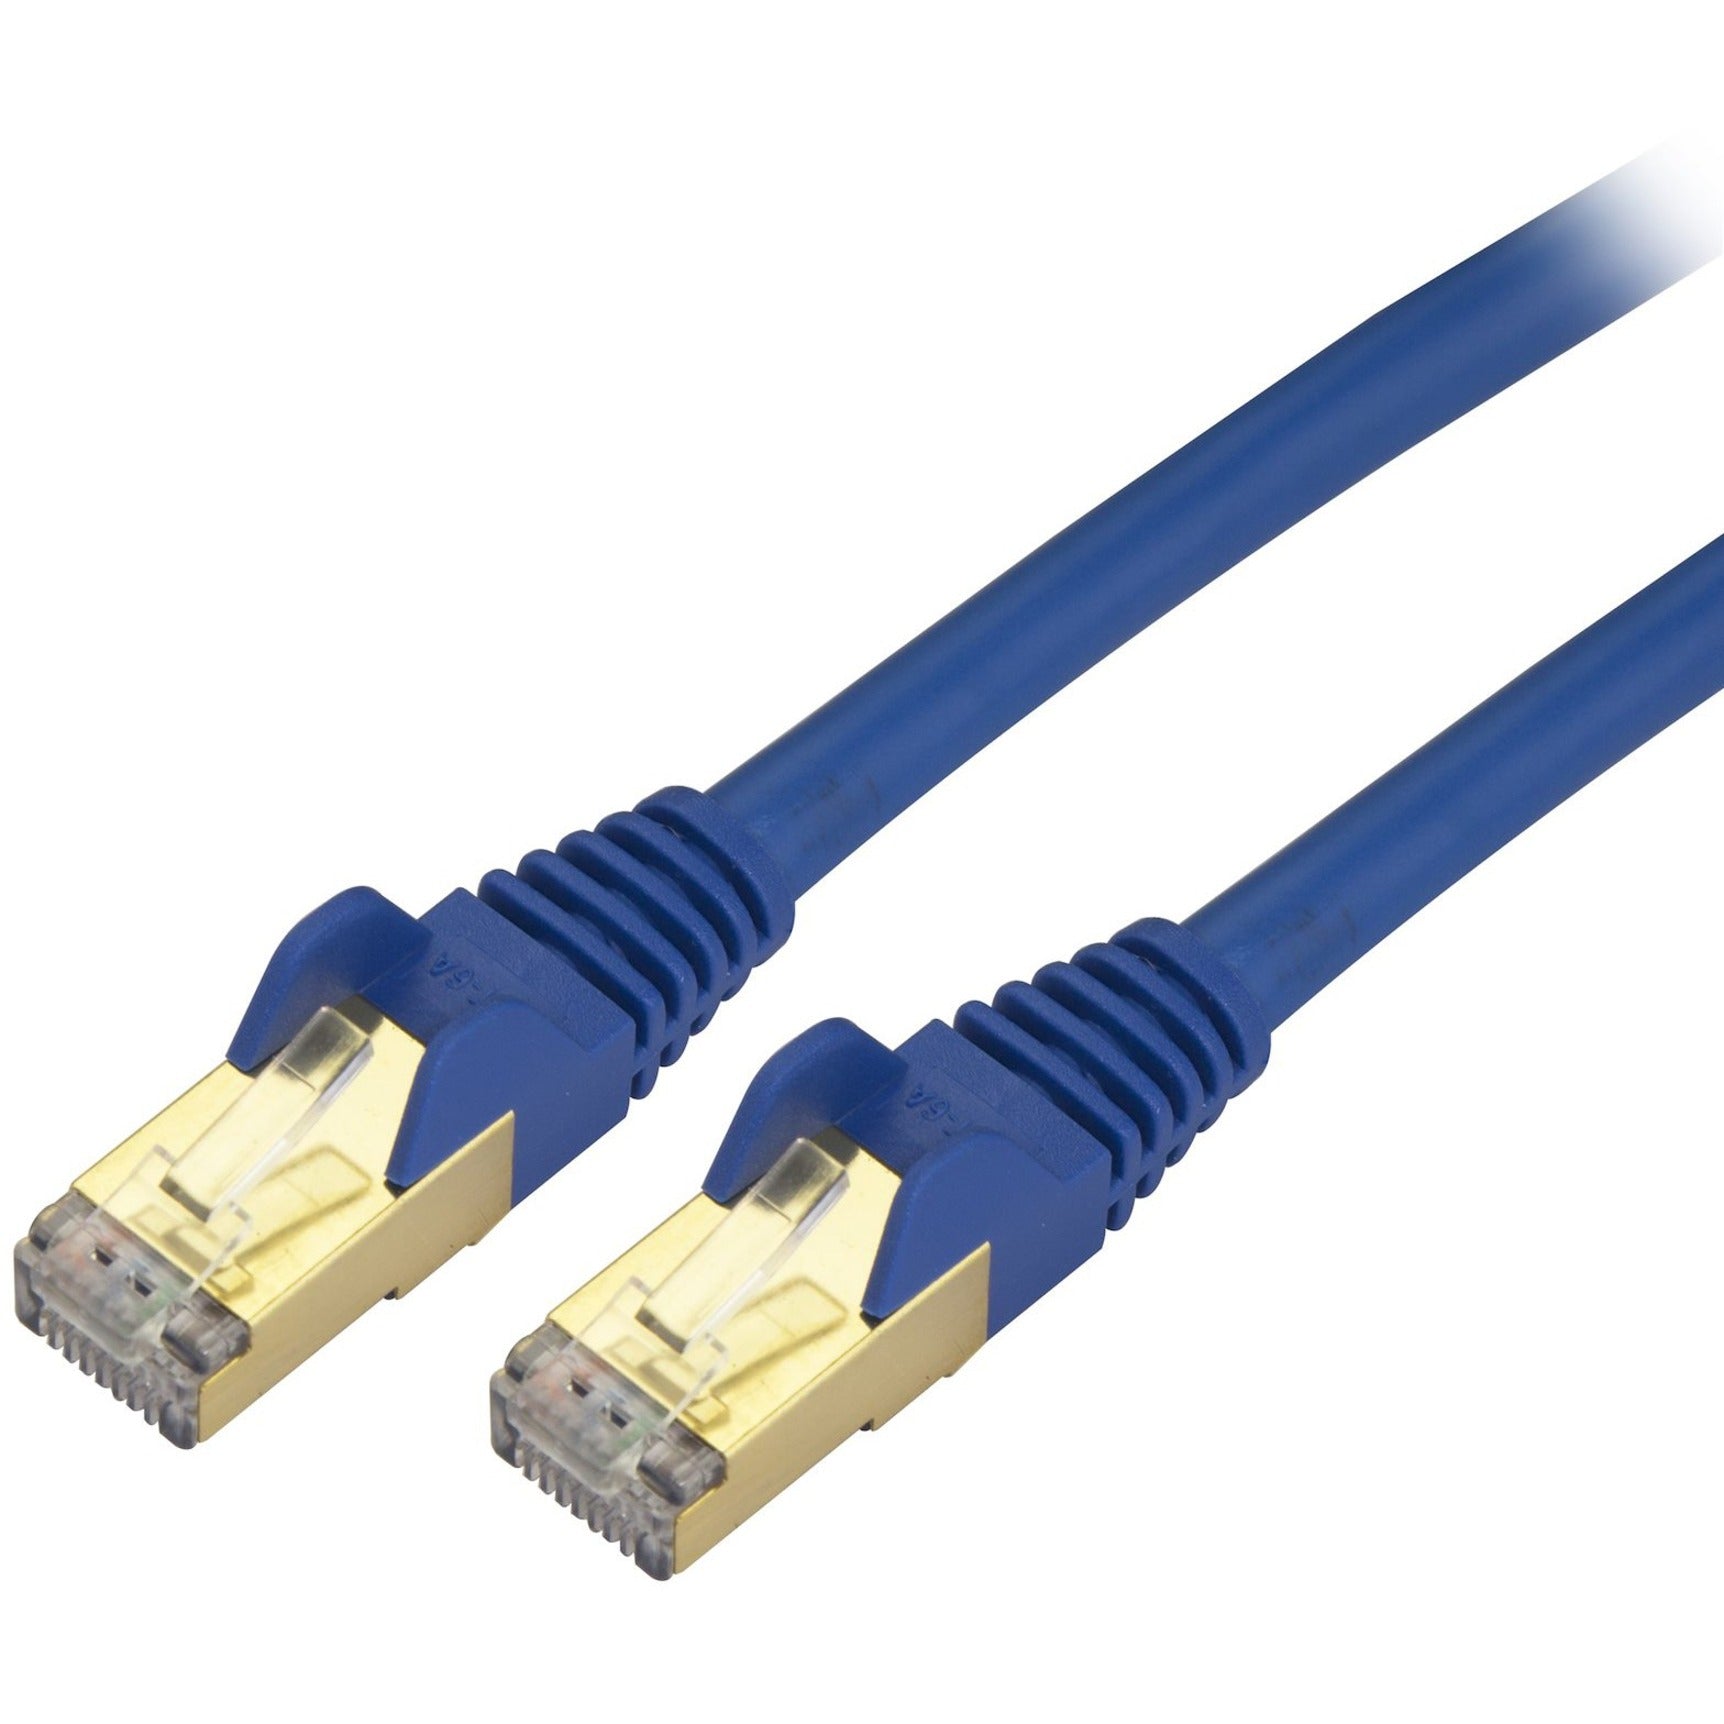 StarTech.com C6ASPAT9BL Cat6a Ethernet Patch Cable - Shielded (STP) - 9 ft., Blue, Snagless RJ45 Ethernet Cord